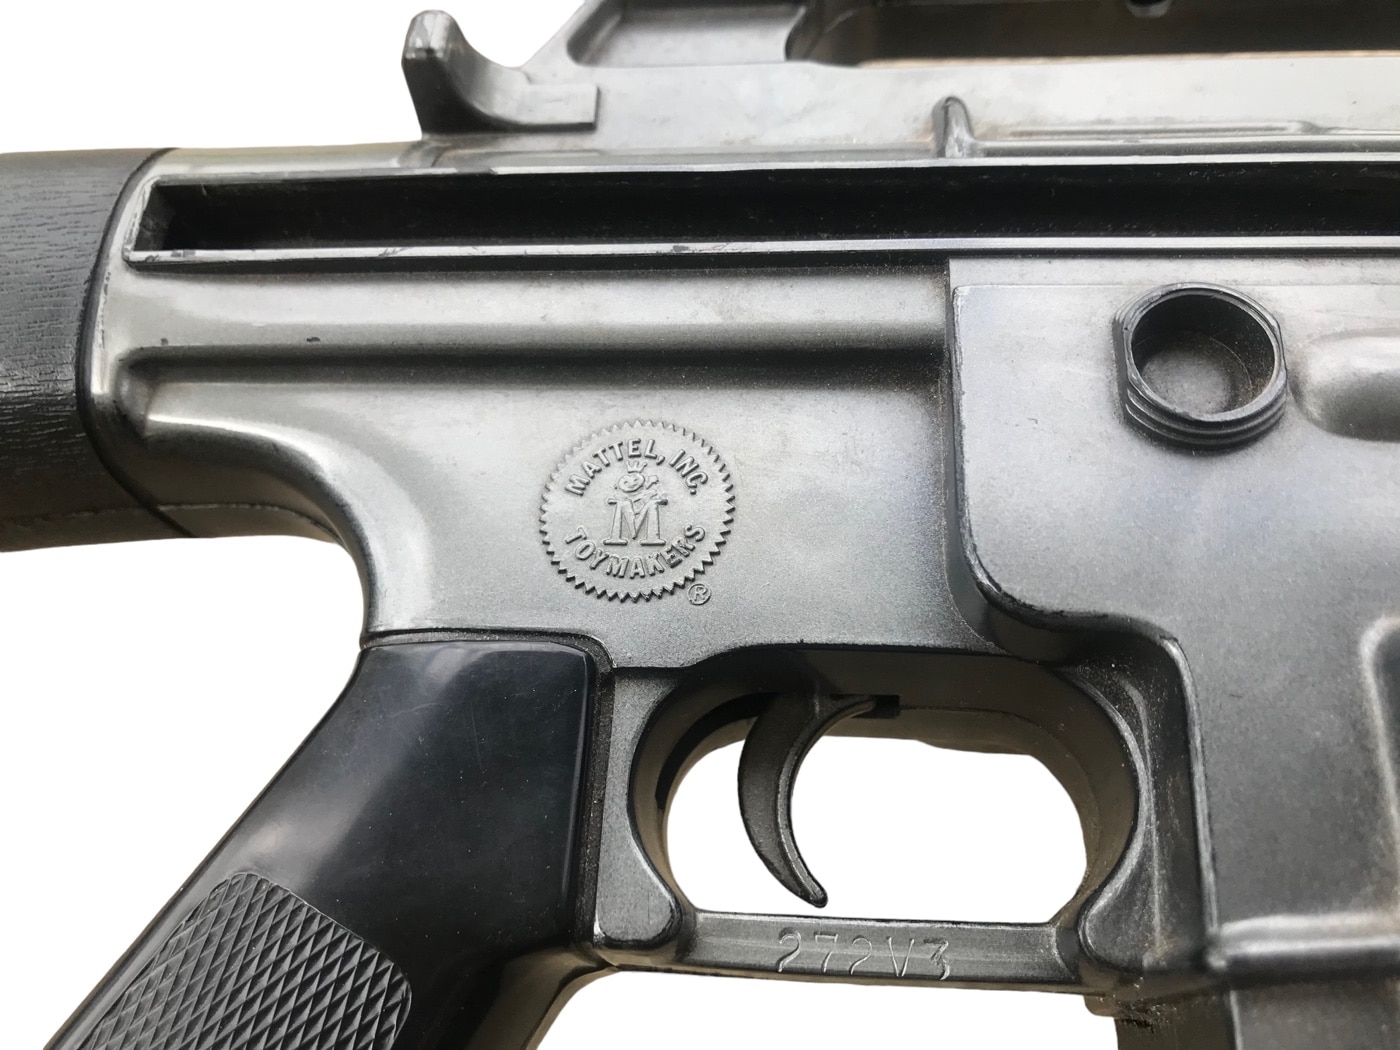 mattel logo on the marauder rifle toy gun